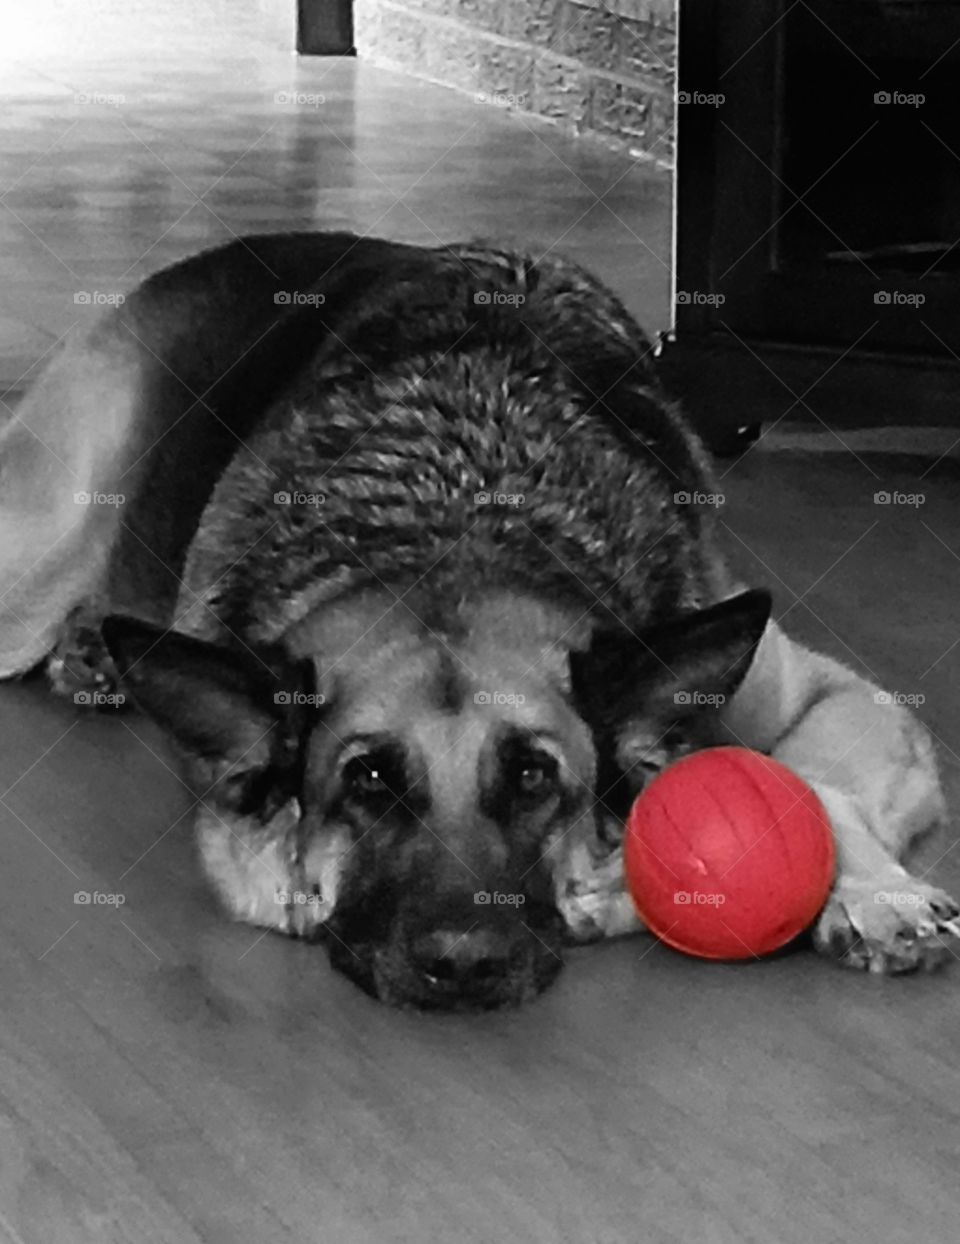 My dog's favorite ball